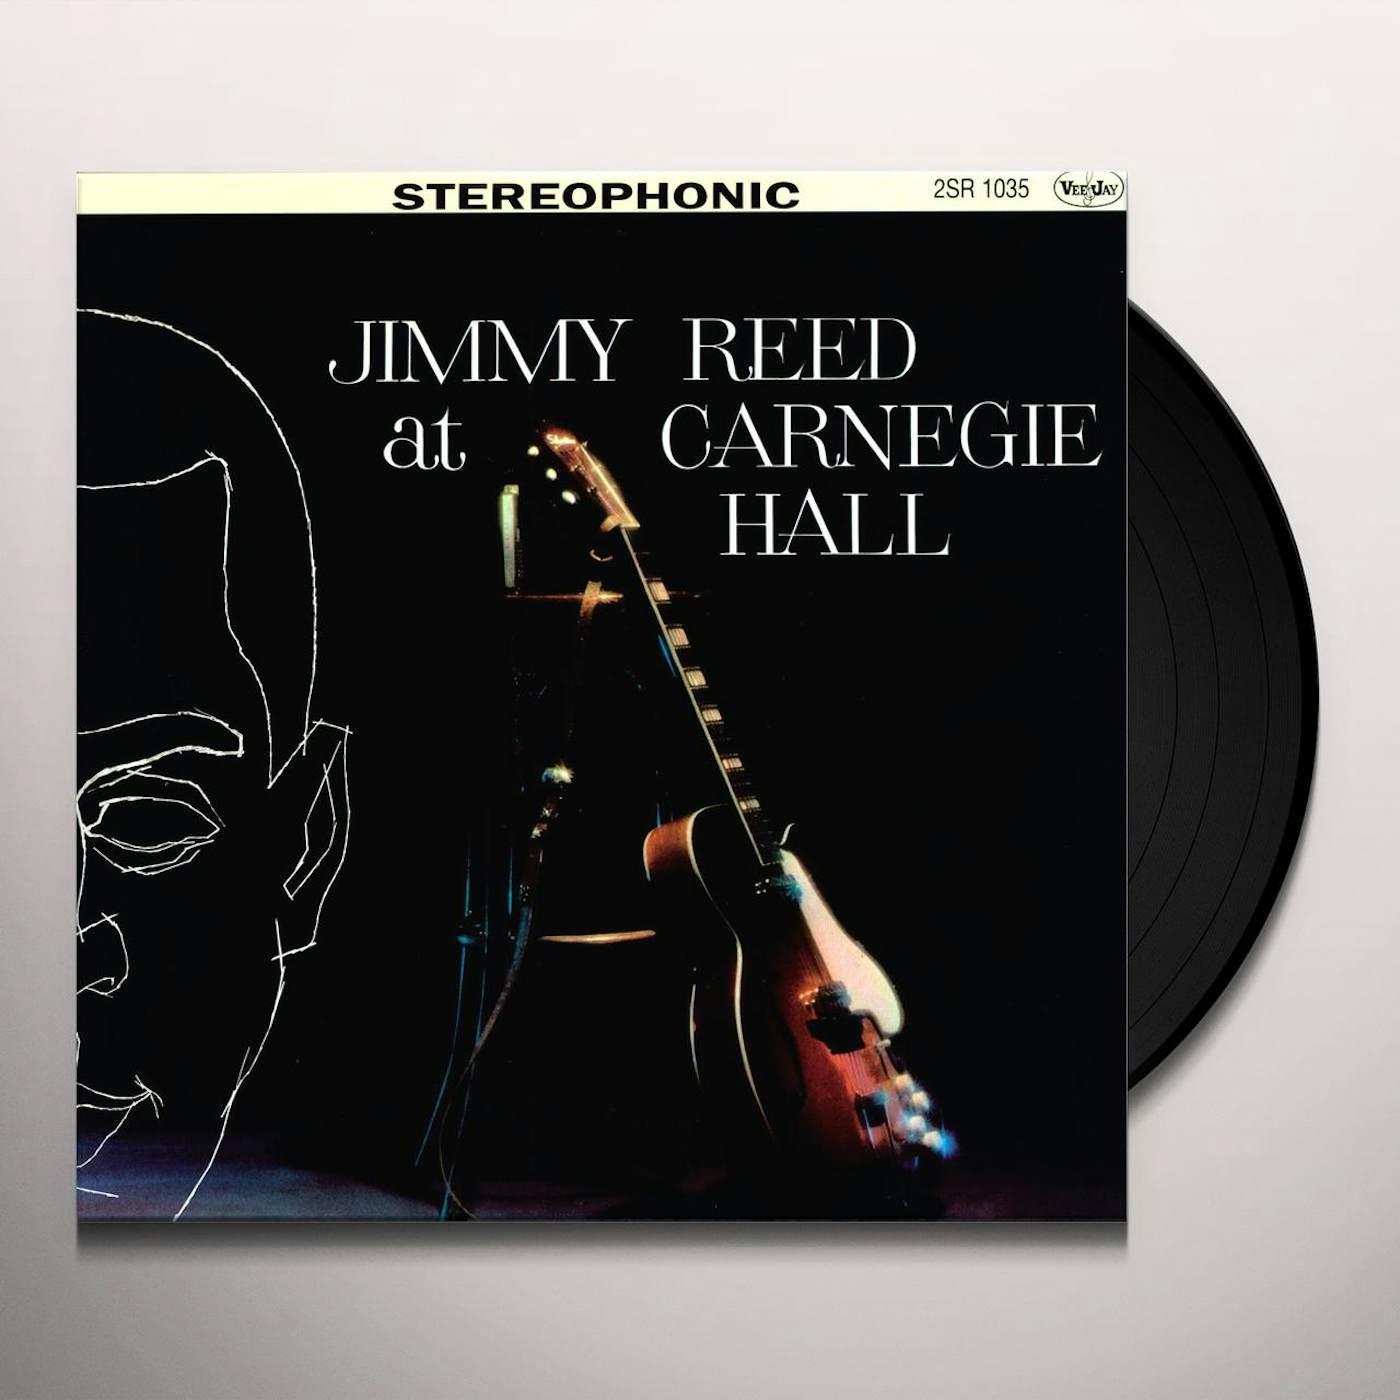 Jimmy Reed AT CARNEGIE HALL Vinyl Record - 180 Gram Pressing